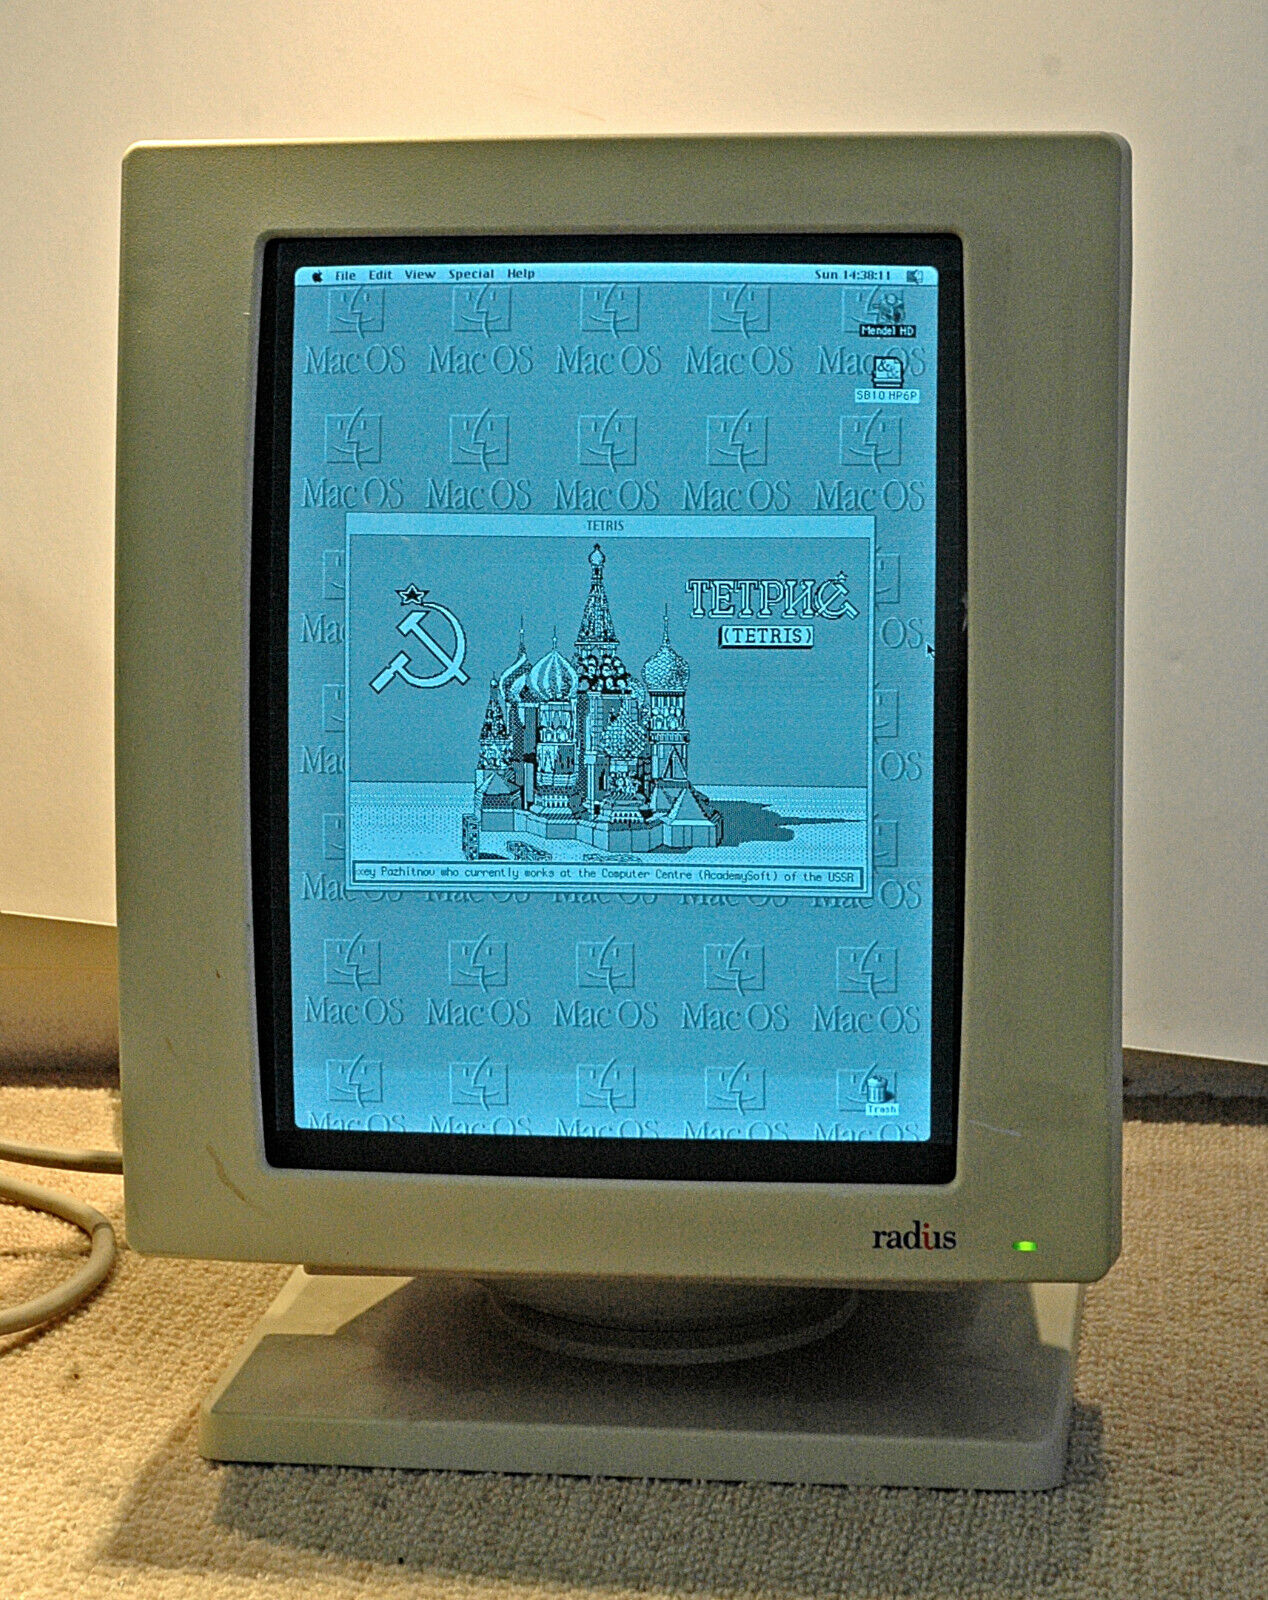 WORKING Radius Model 0311 Full Page Display 640x870 Pixels for Vintage Macintosh